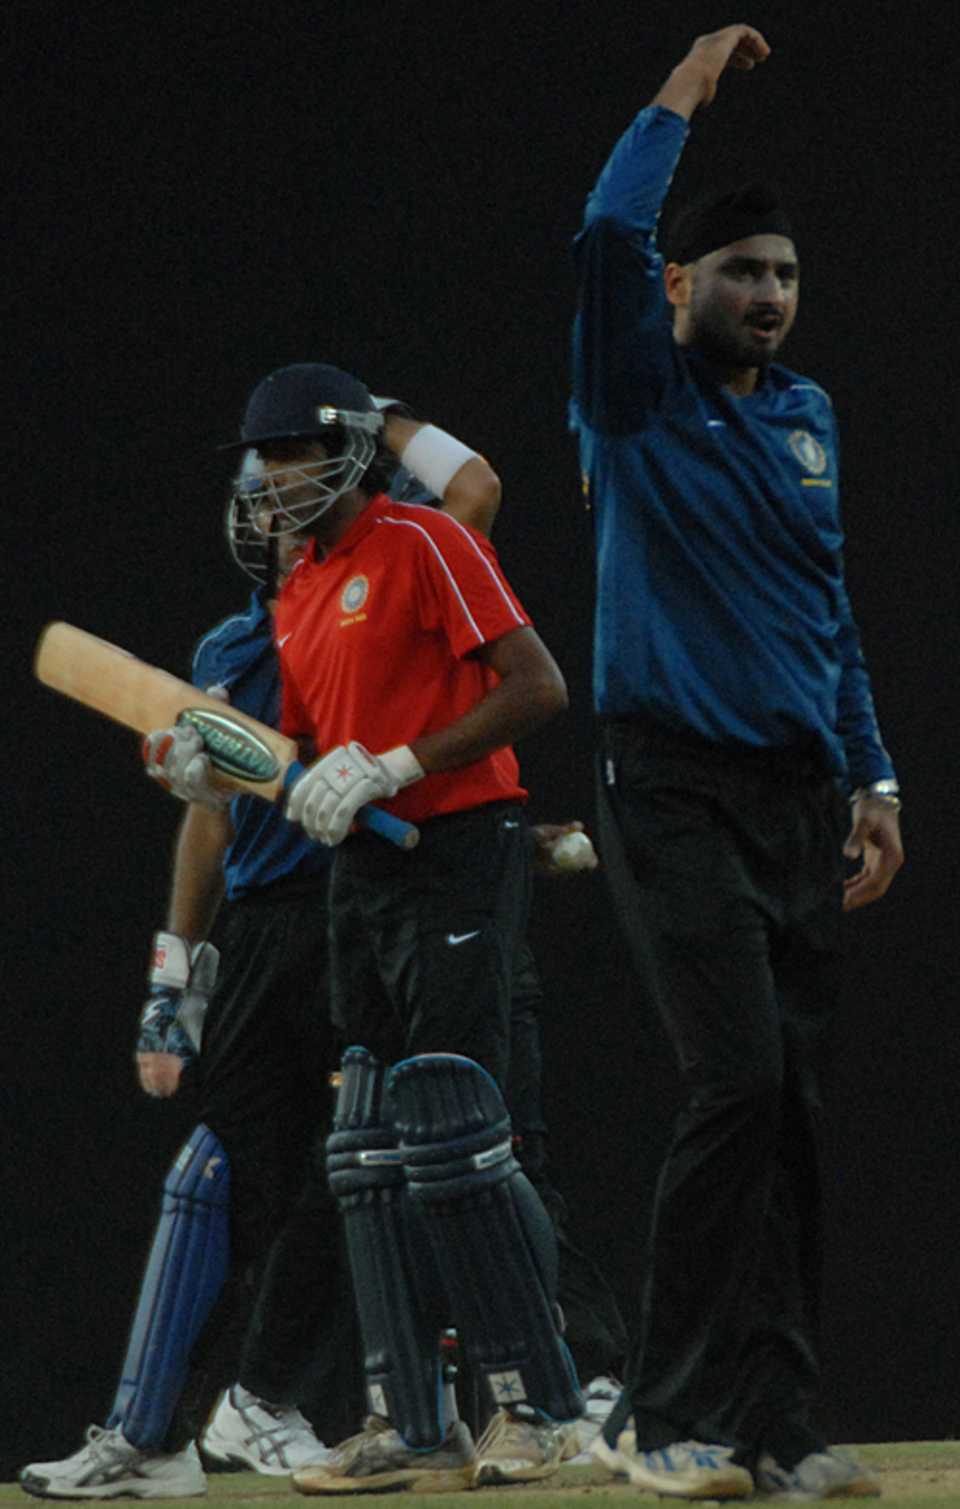 Harbhajan Singh picks up another wicket